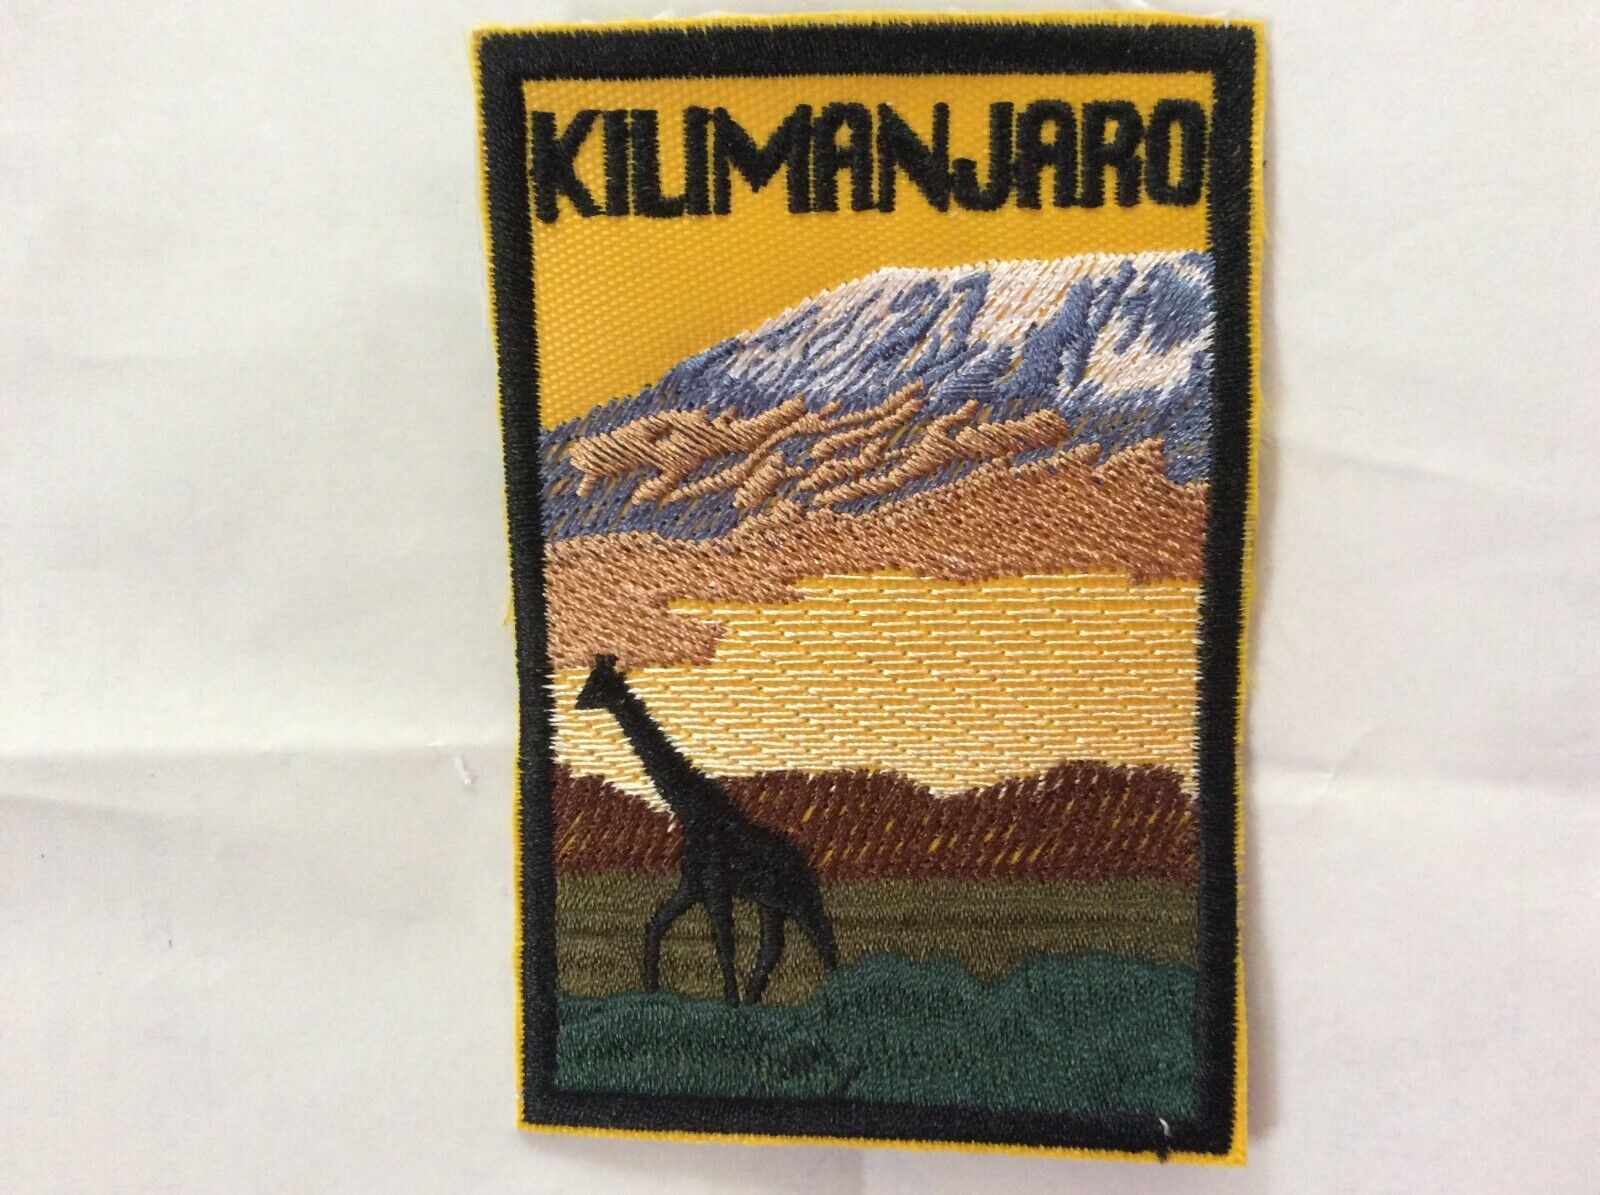 Patch Mount Kilimanjaro Tanzania Kenya Africa Souvenir Giraffe